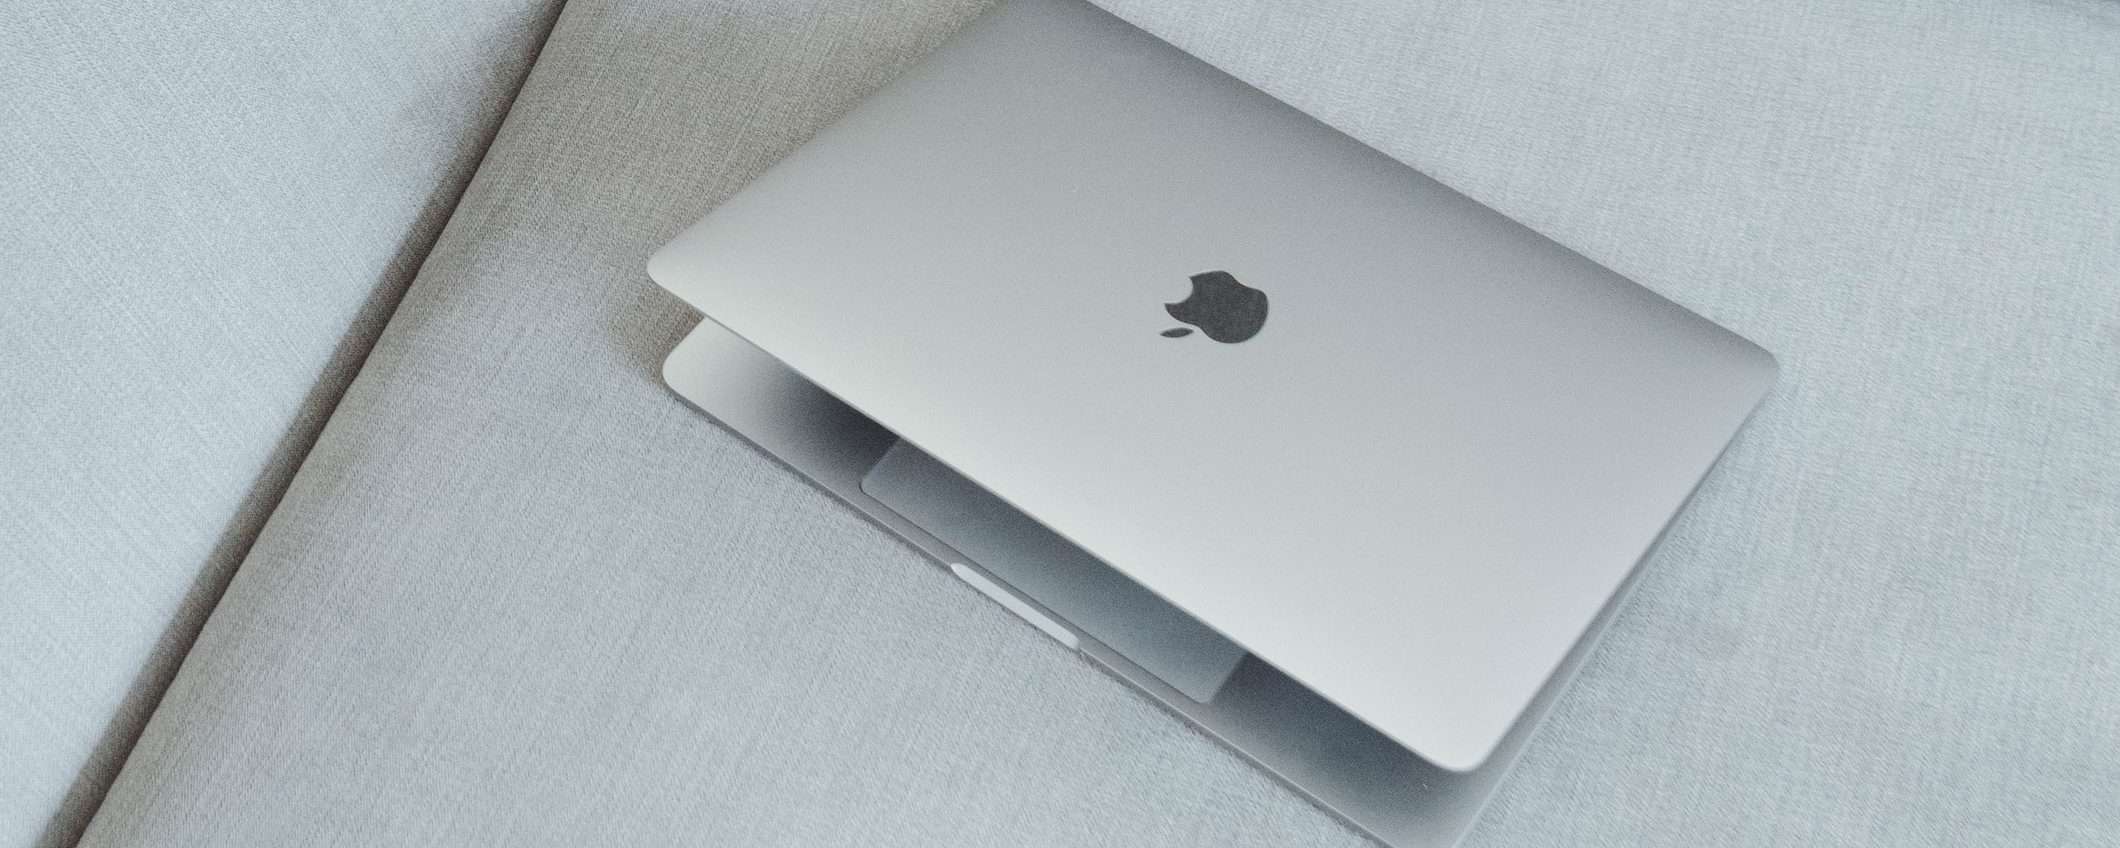 Apple: nessun MacBook da 12 pollici in arrivo